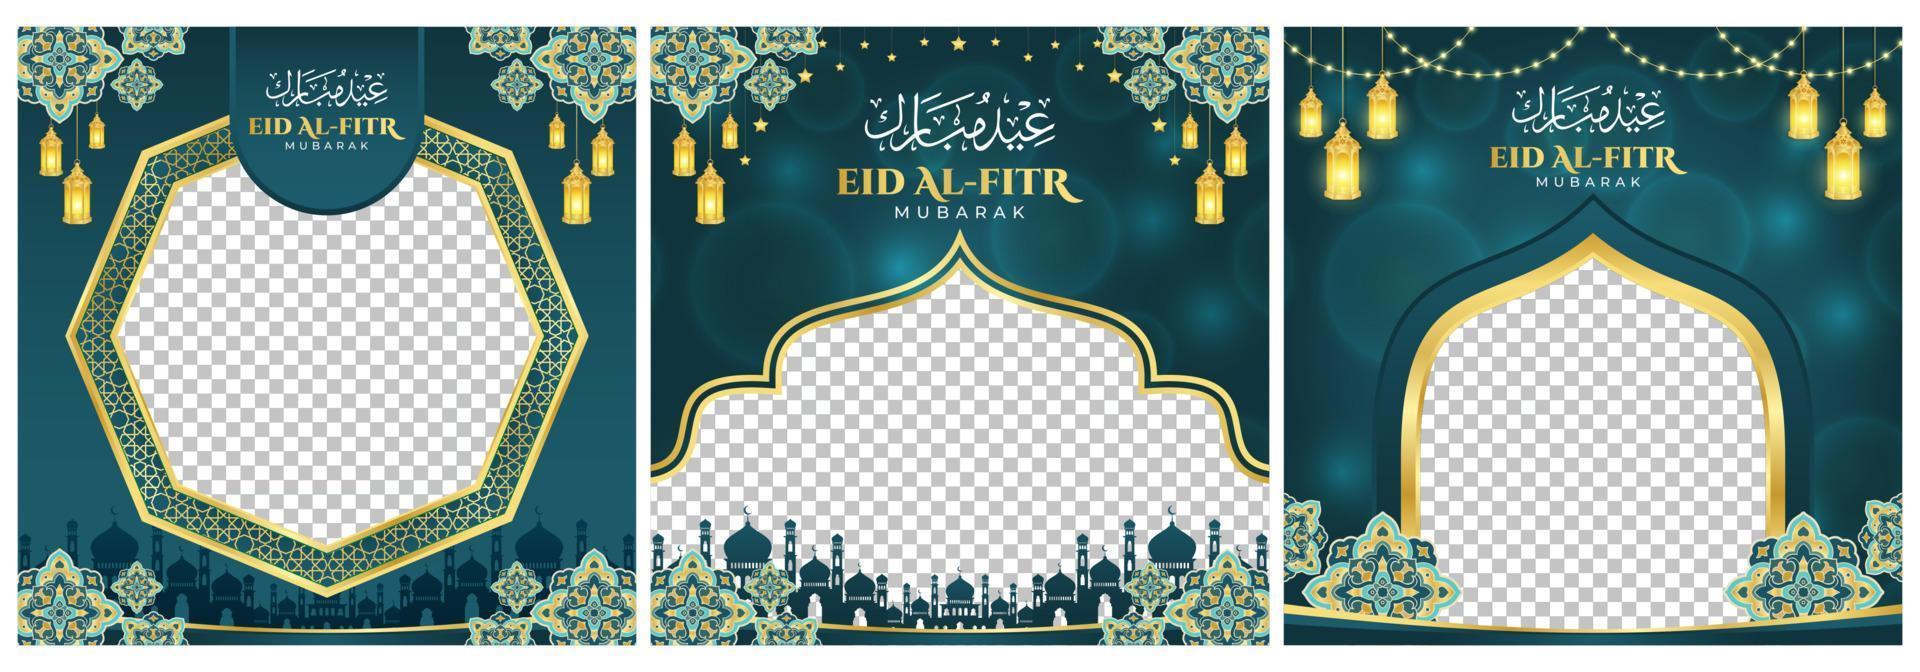 Eid al fitr mubarak Islamic ornament template for background, sale ...